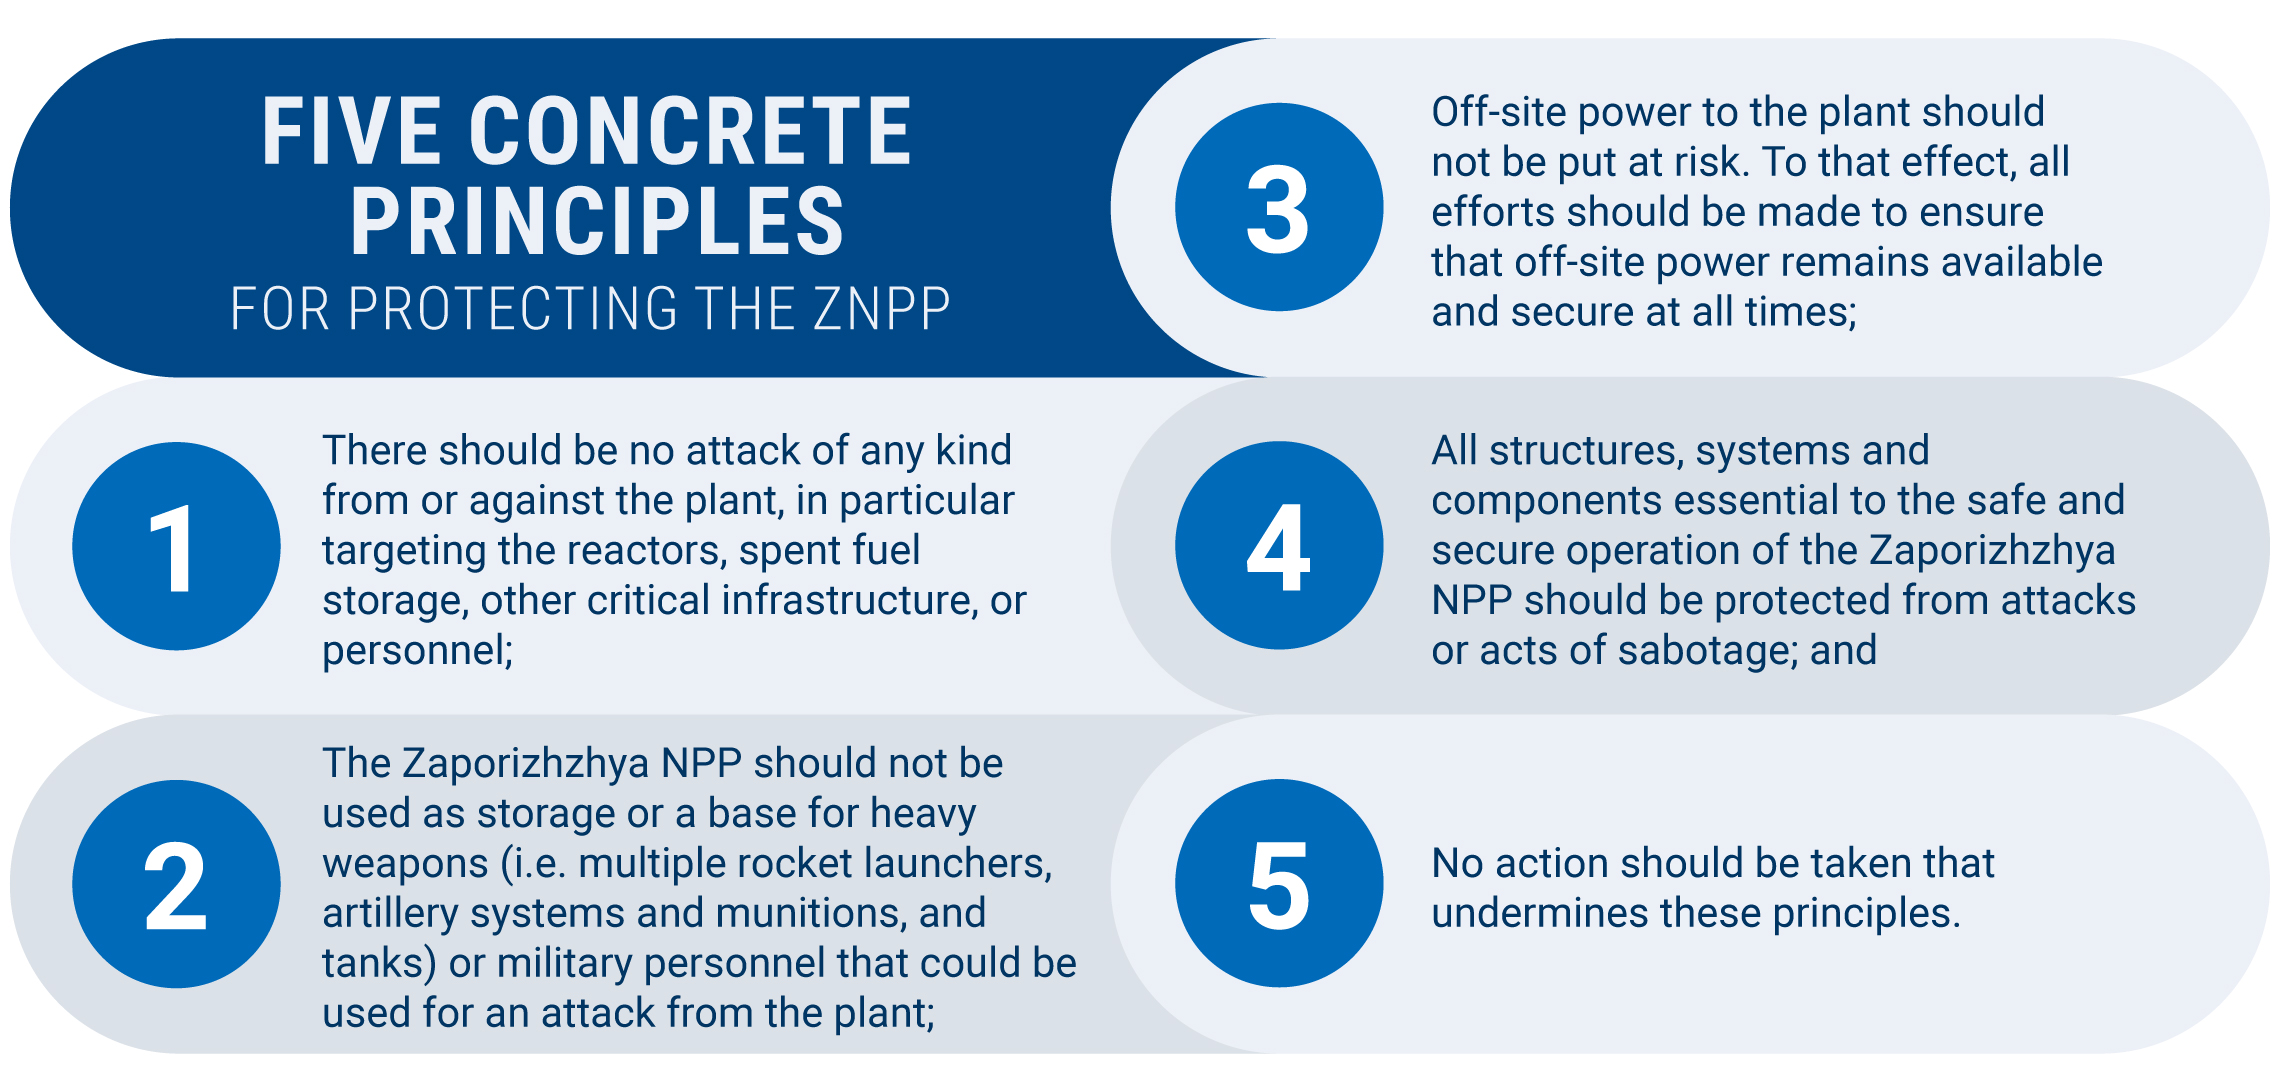 The Five Concrete Principles 